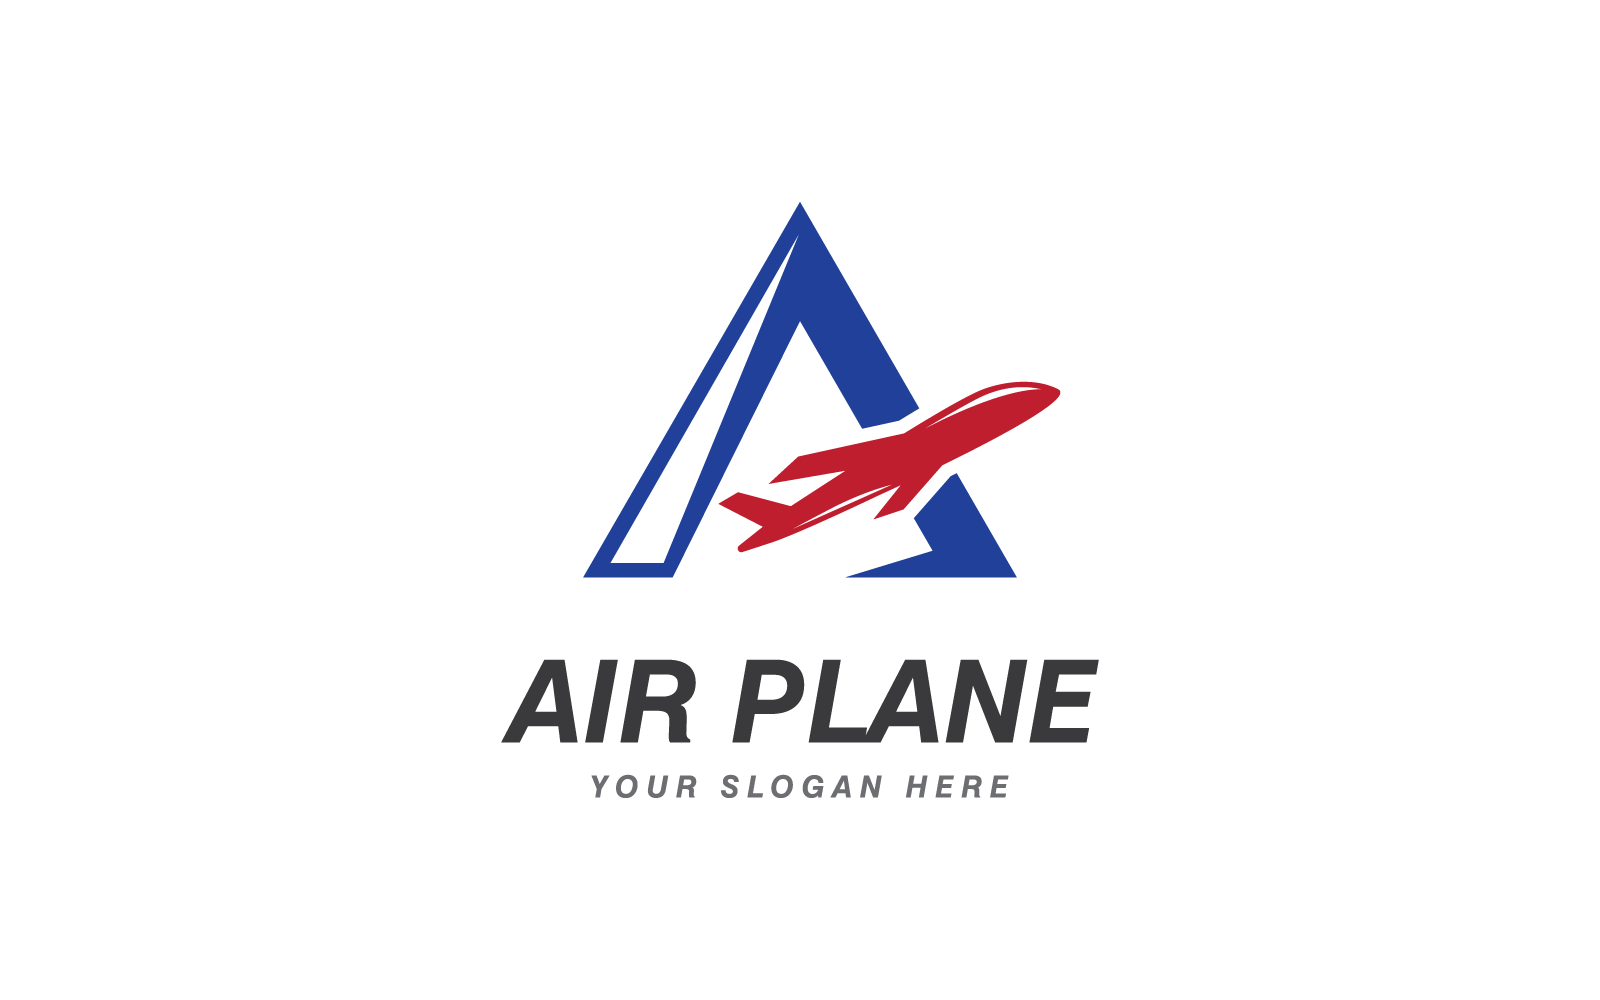 Air Plane illustration vector logo template